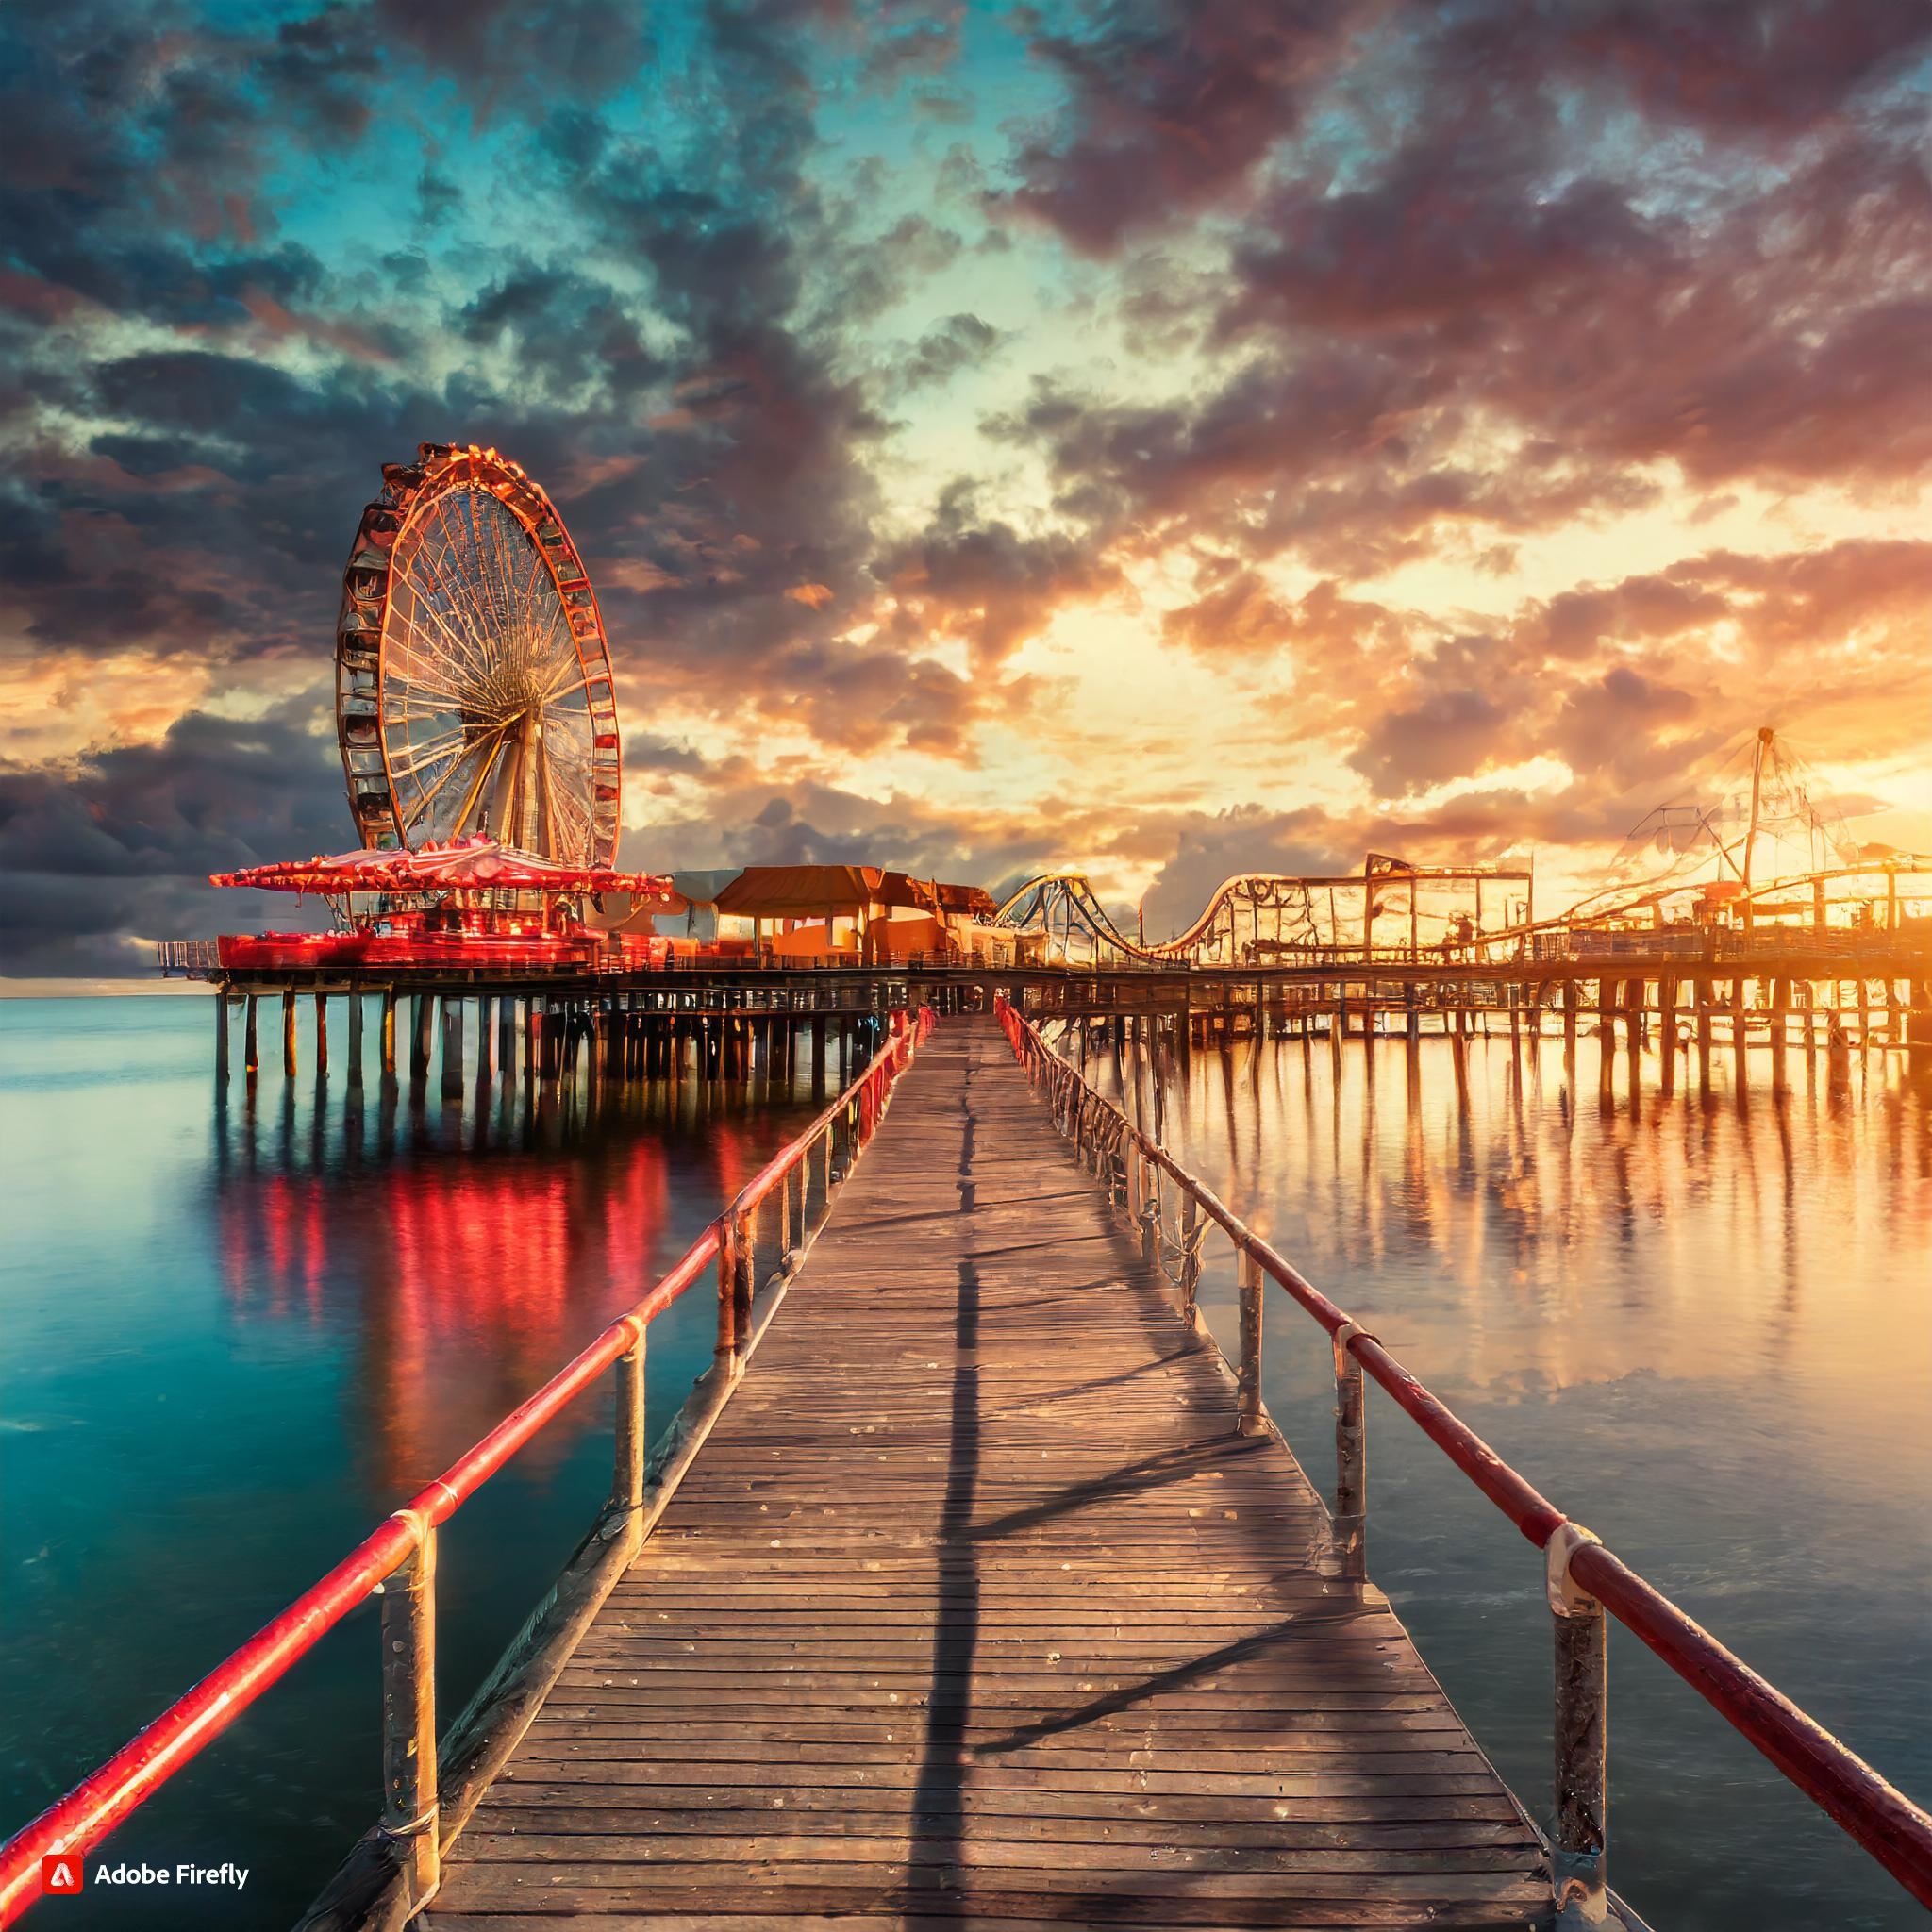  Firefly pier, sureal landscape, beautiful sunset and cloudy sky, light reflecting water, glowing blu.jpg